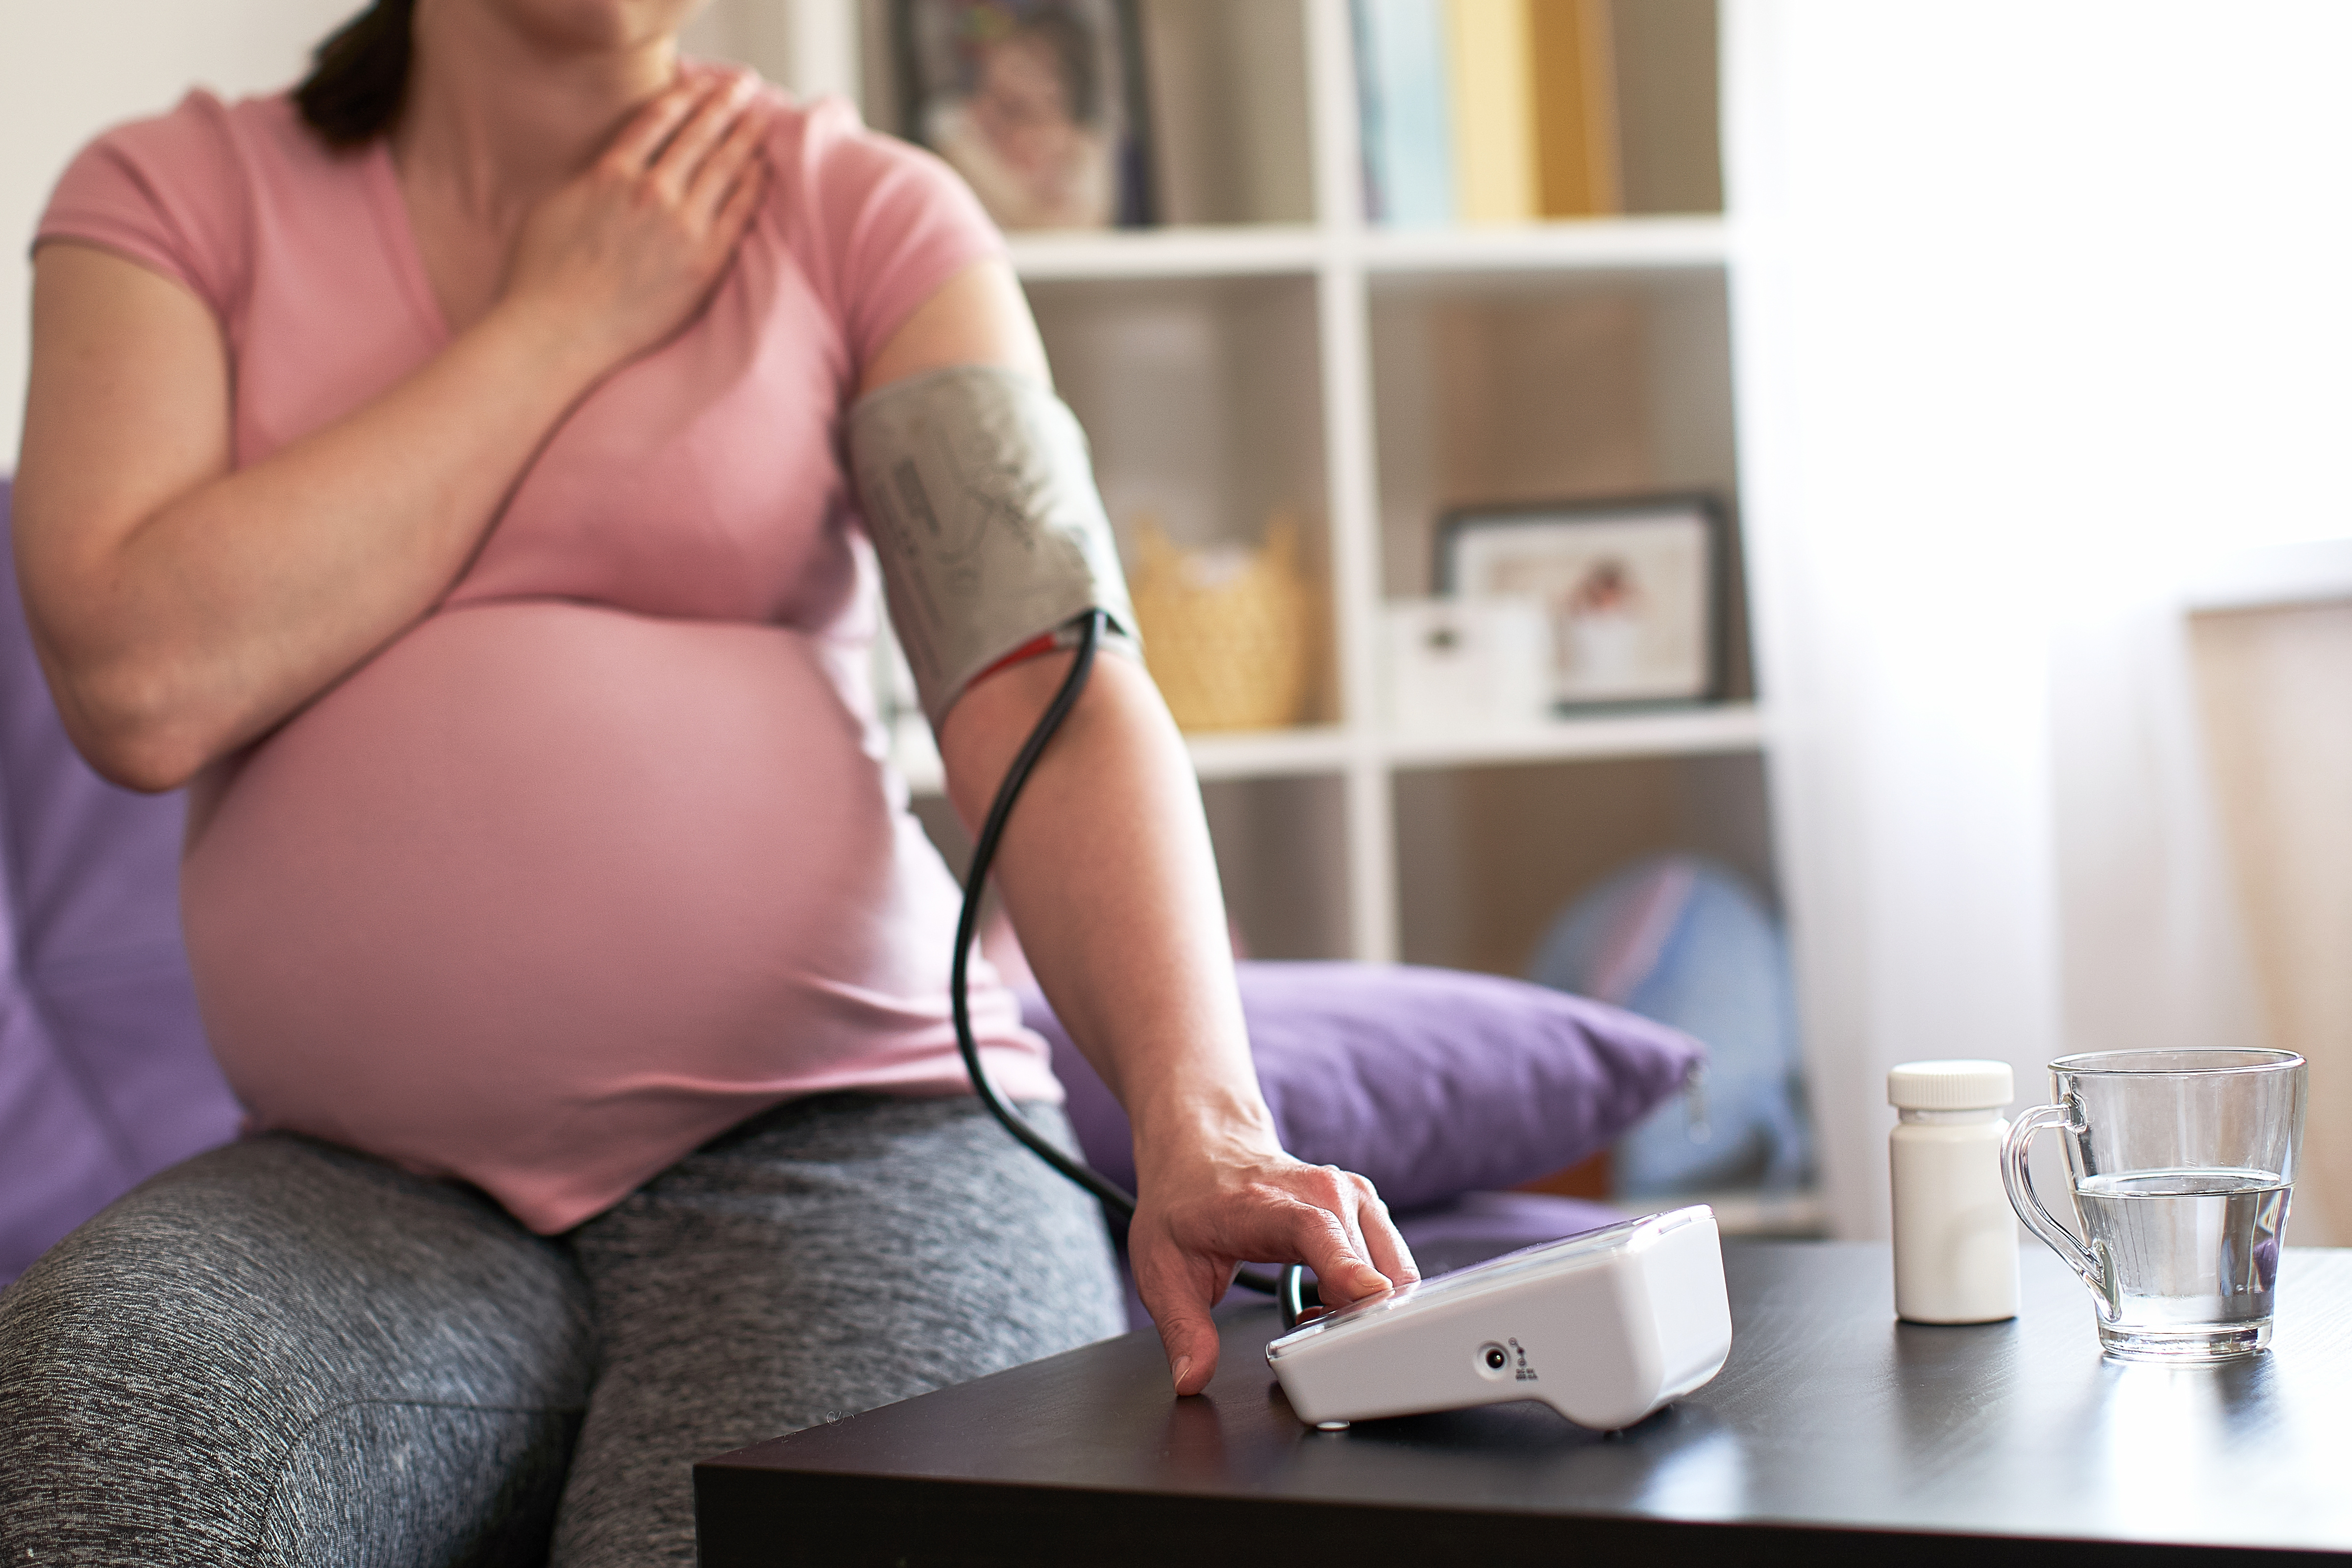 New Technologies Expand Preeclampsia Screenings in Pregnant Women